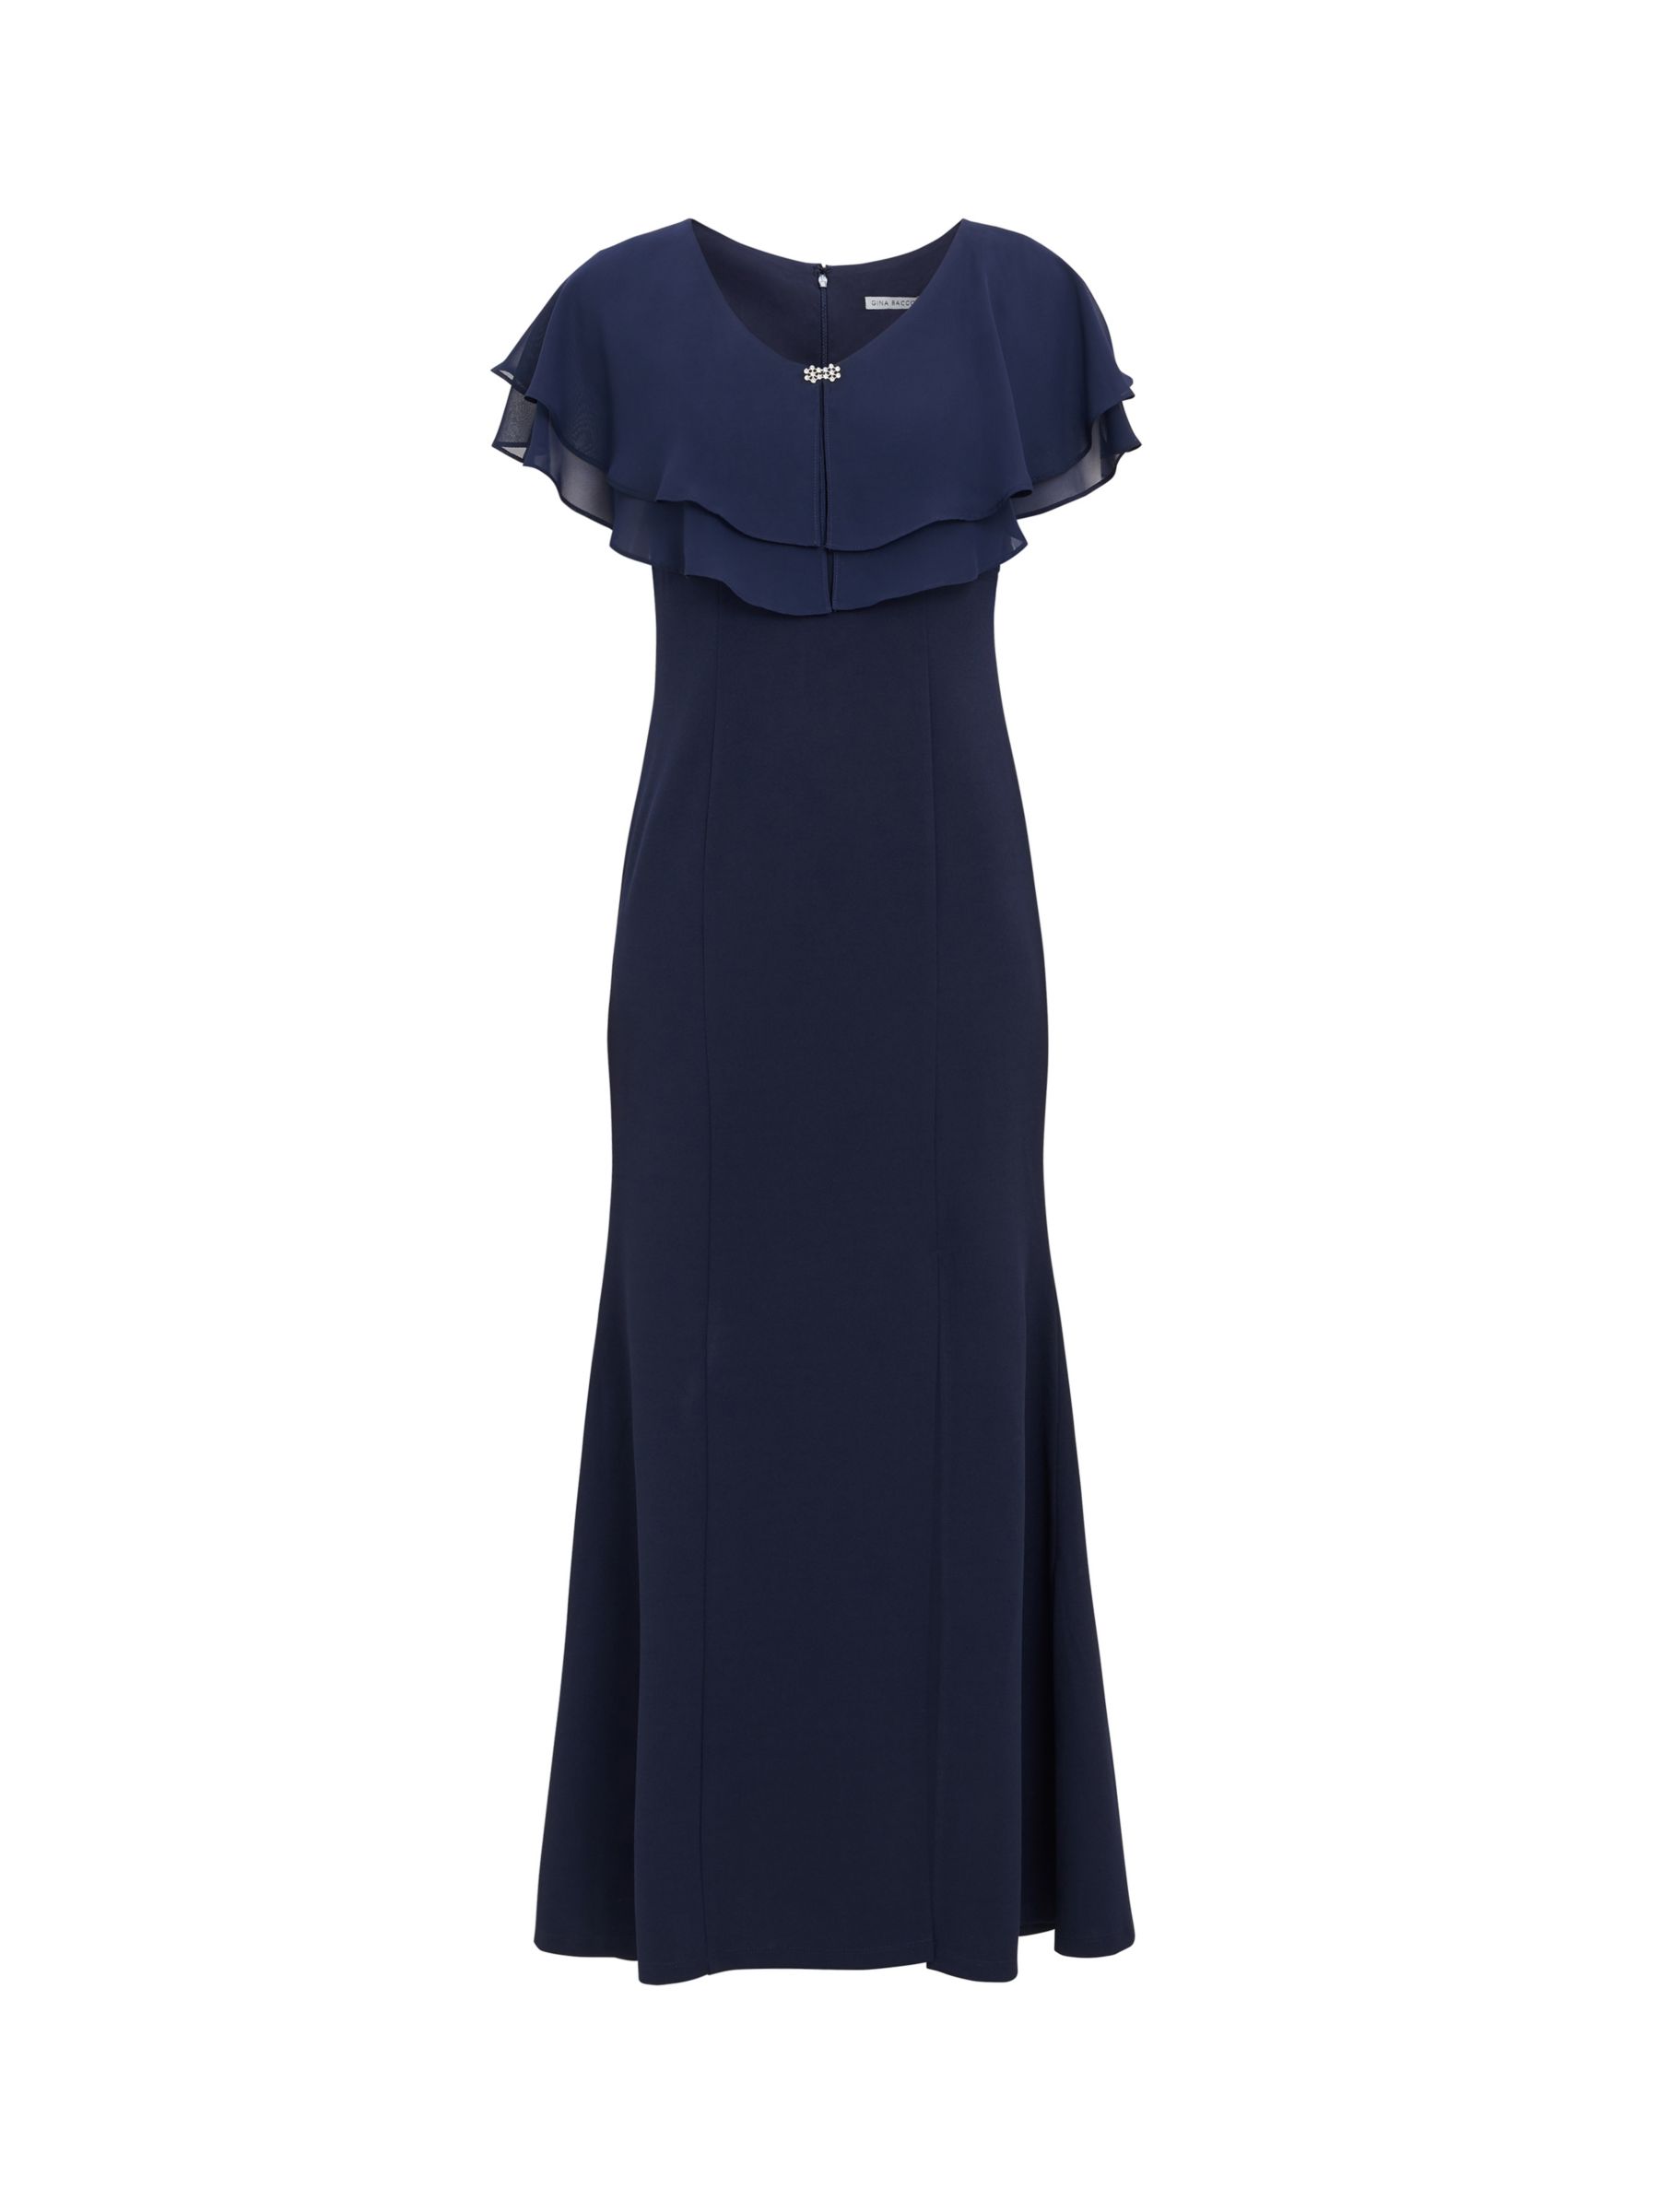 Buy Gina Bacconi Sharla Cape Maxi Dress, Navy Online at johnlewis.com